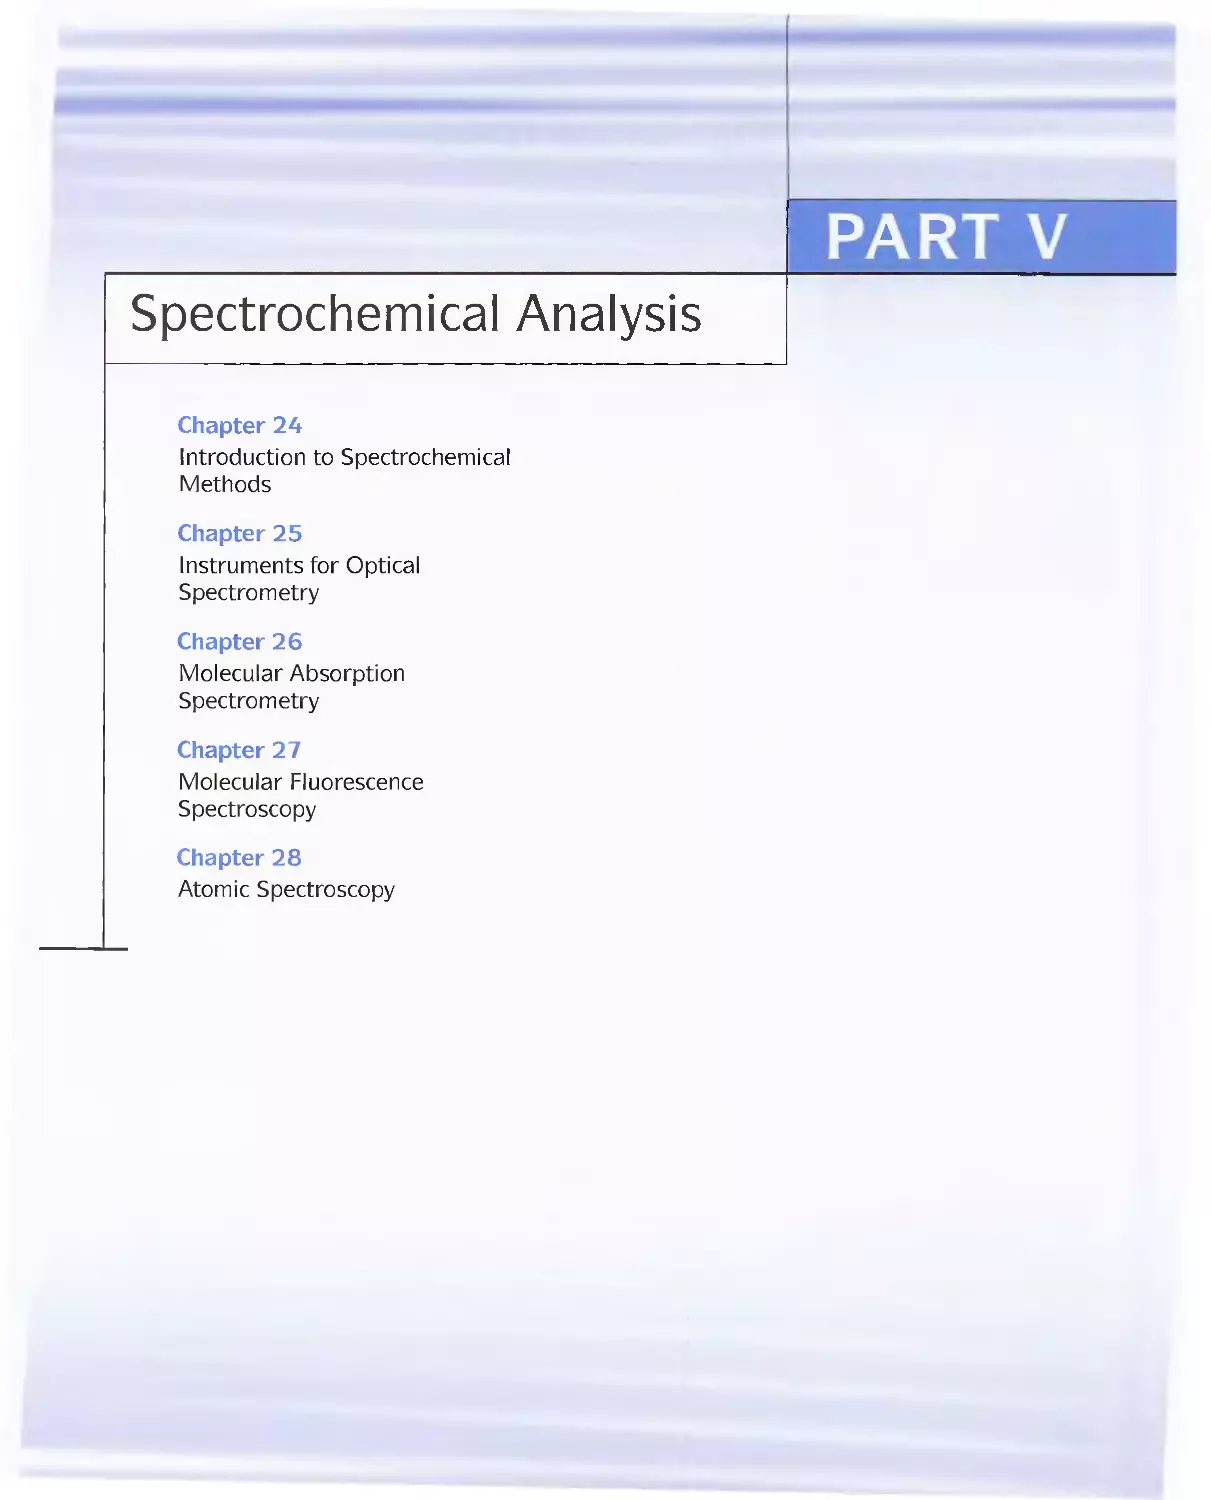 Part 5 - Spectrochemical Methods